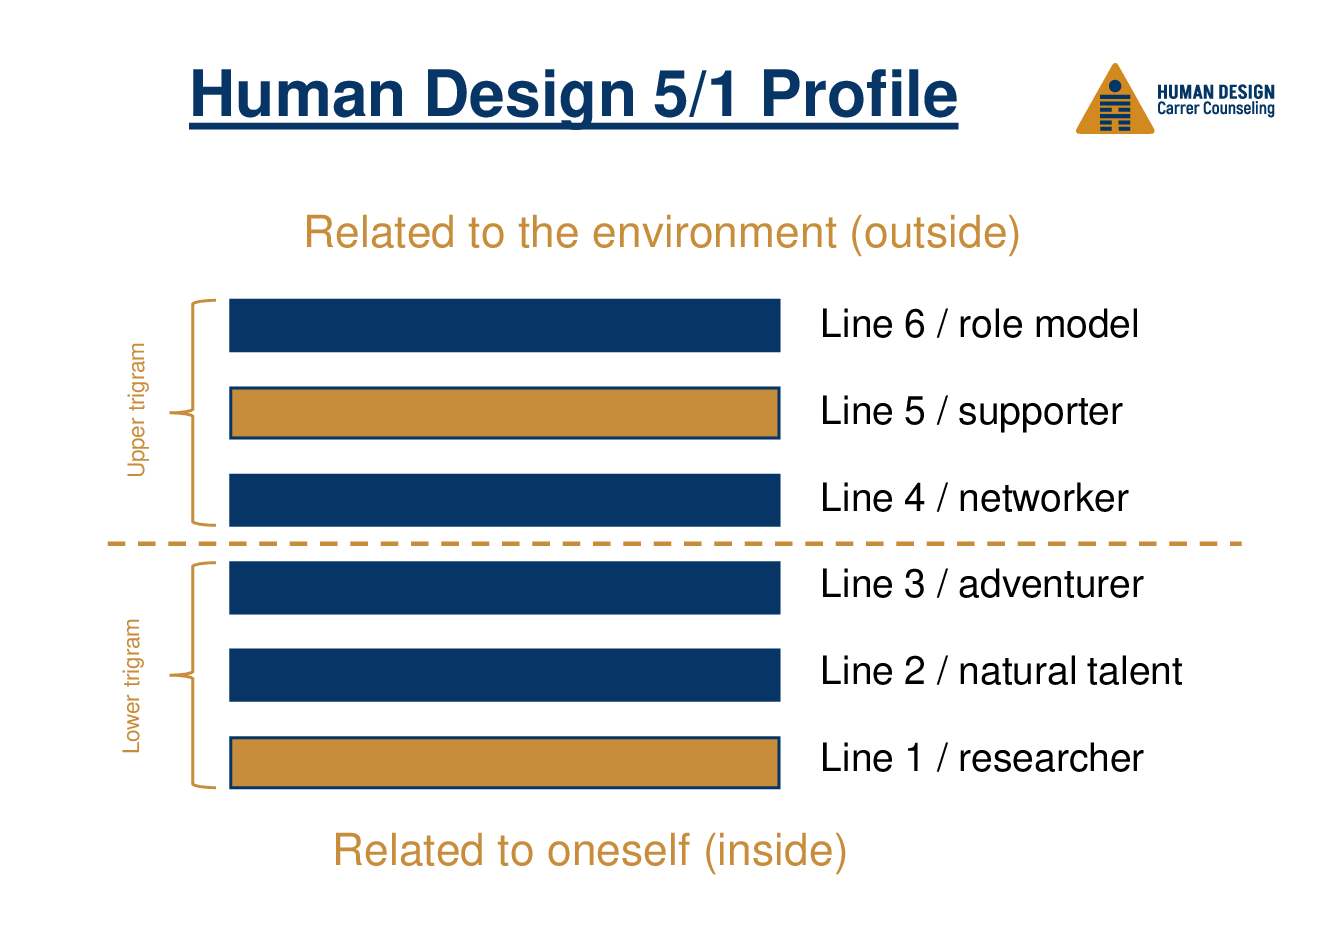 Human Design 5/1 Profile on the job